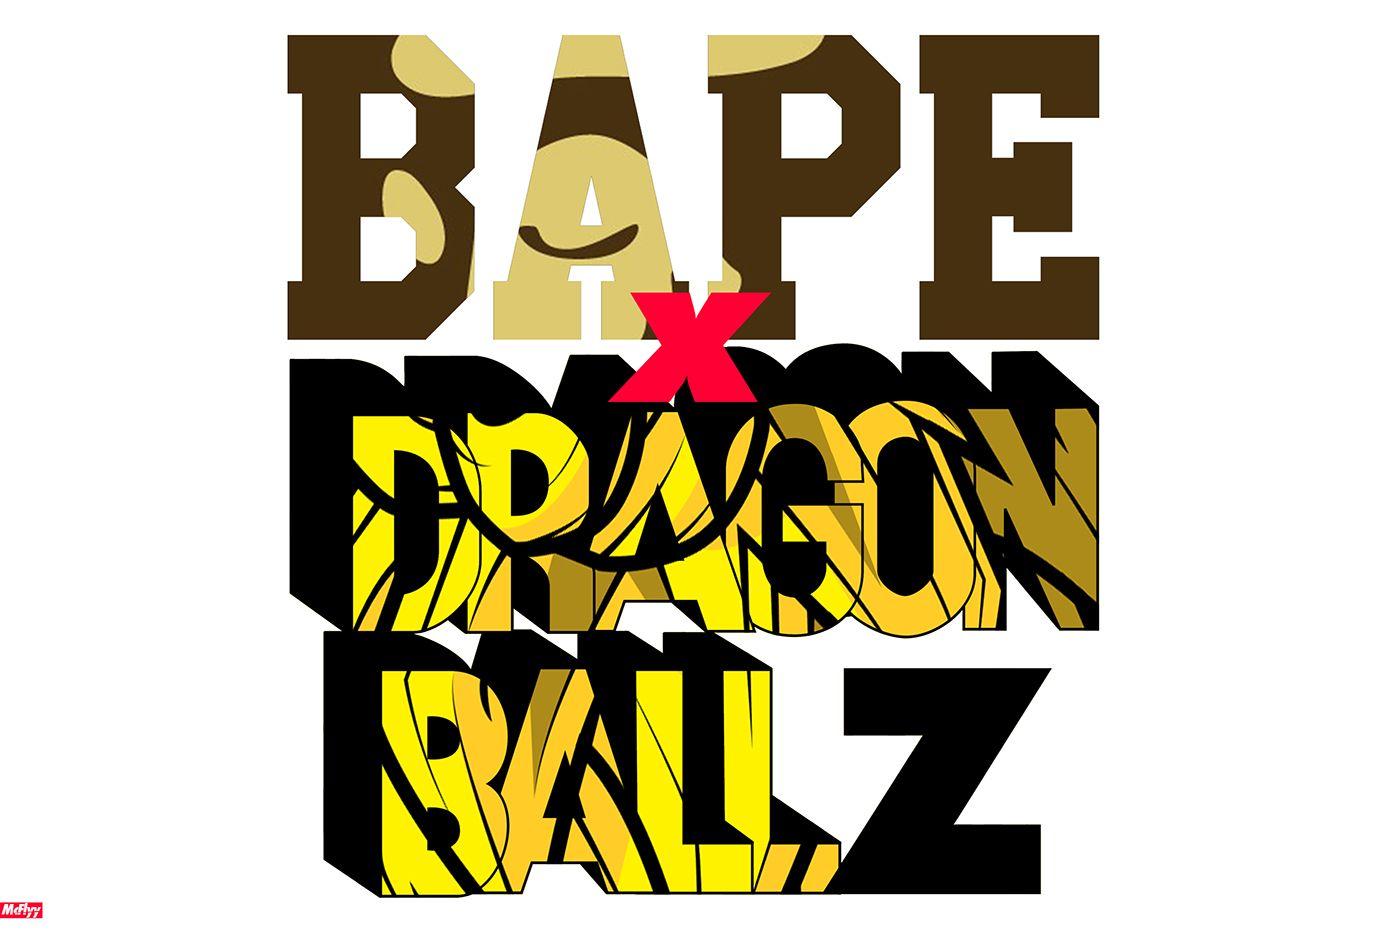 Cool BAPE Logo - Bape x Dragonball Z on Behance